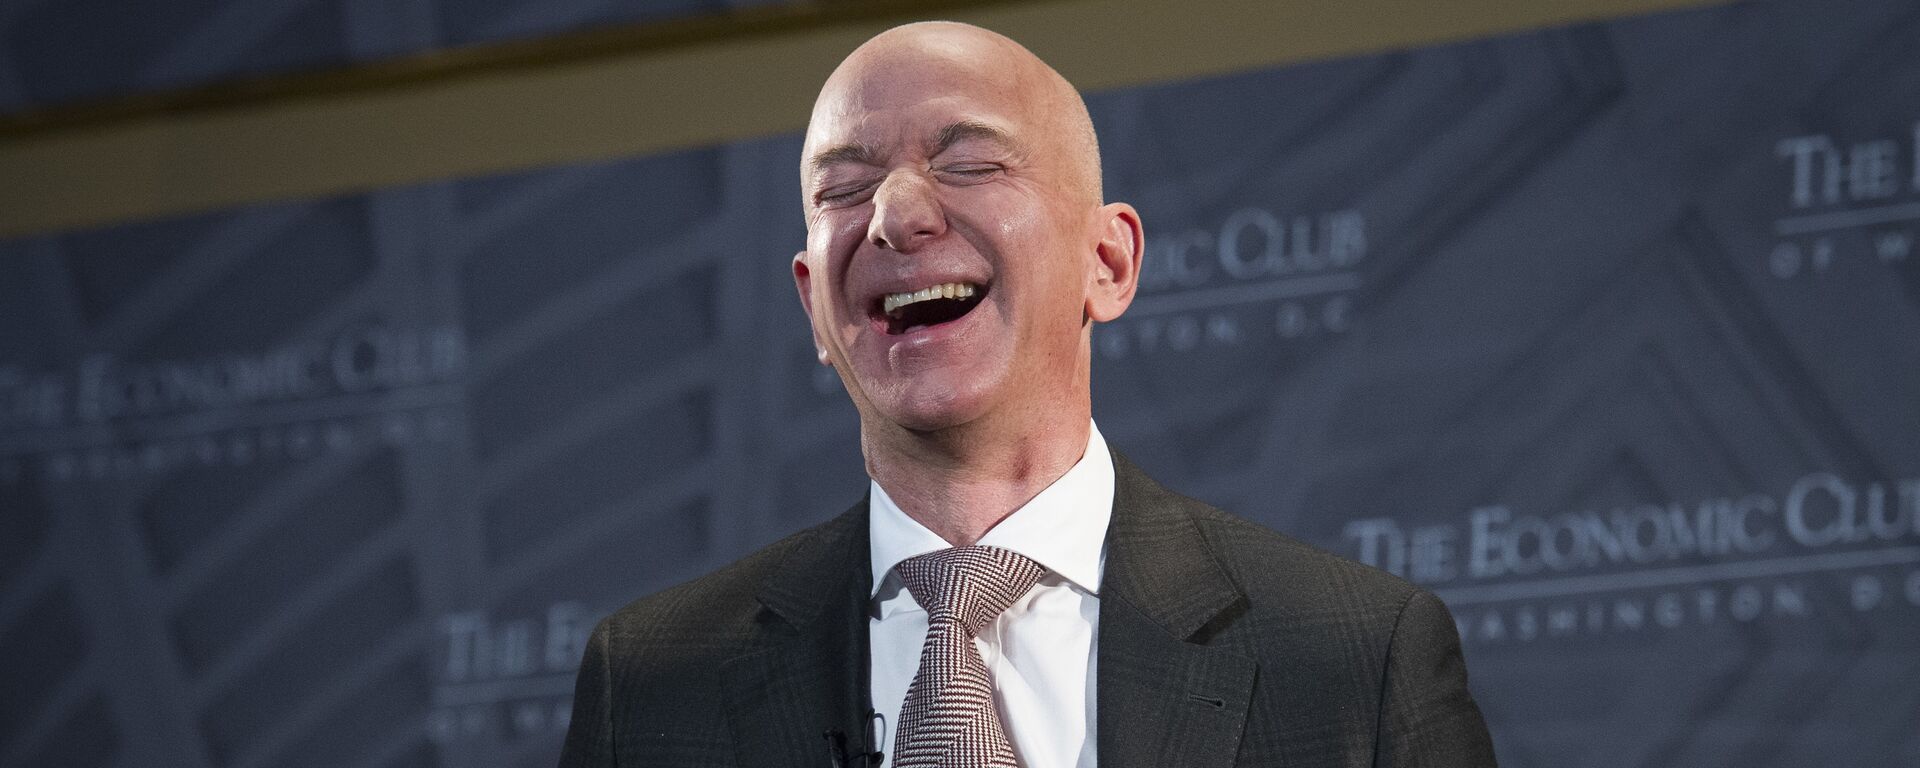 Jeff Bezos, Amazon founder and CEO, laughs as he speaks at The Economic Club of Washington's Milestone Celebration in Washington, Thursday, Sept. 13, 2018 - Sputnik International, 1920, 18.11.2021